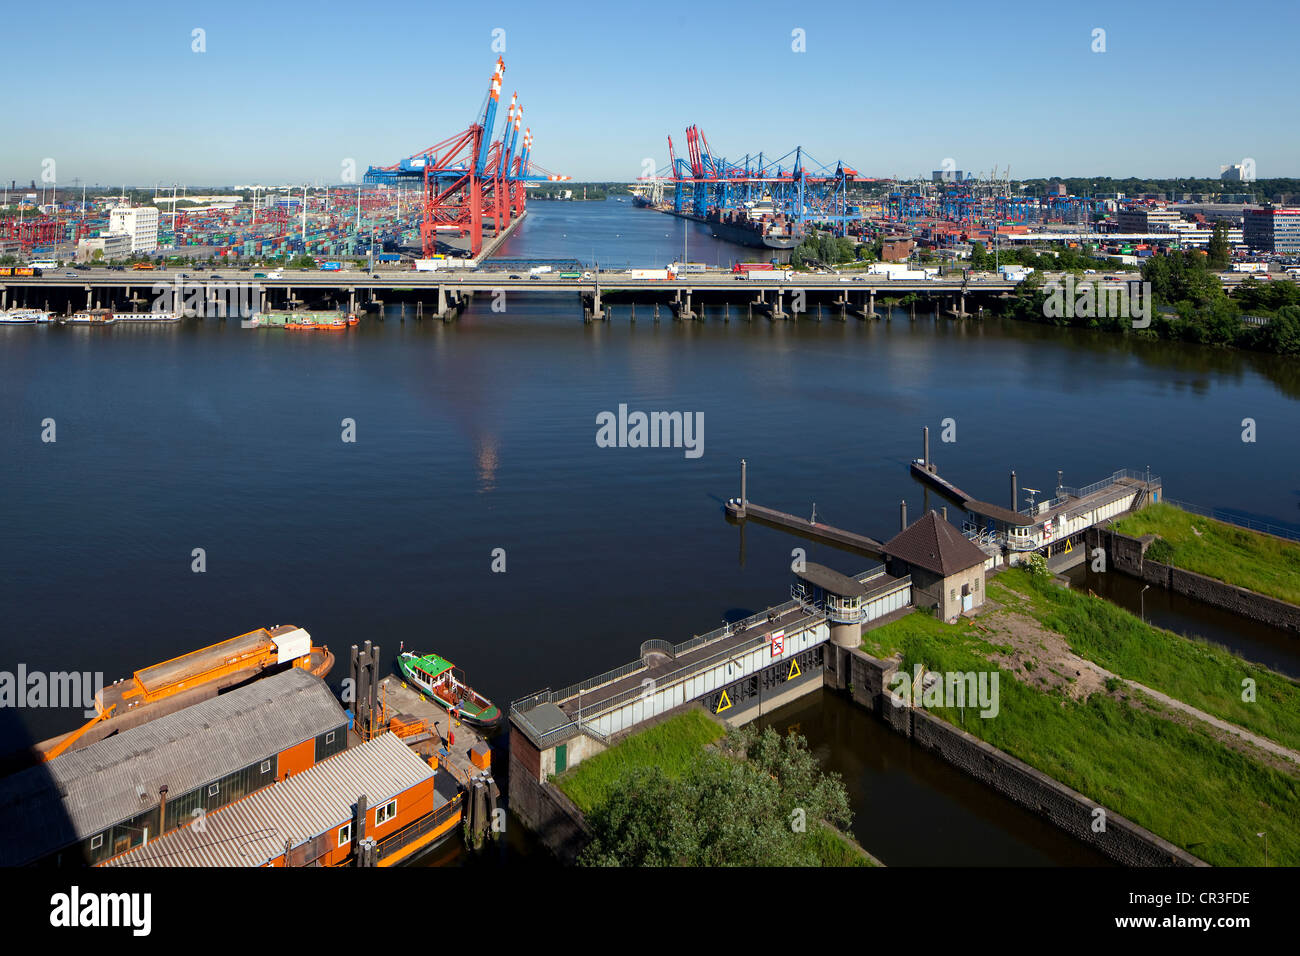 Walterhofer avec port de Rugenberger, Burchardkai, Hambourg, Allemagne, Europe Banque D'Images